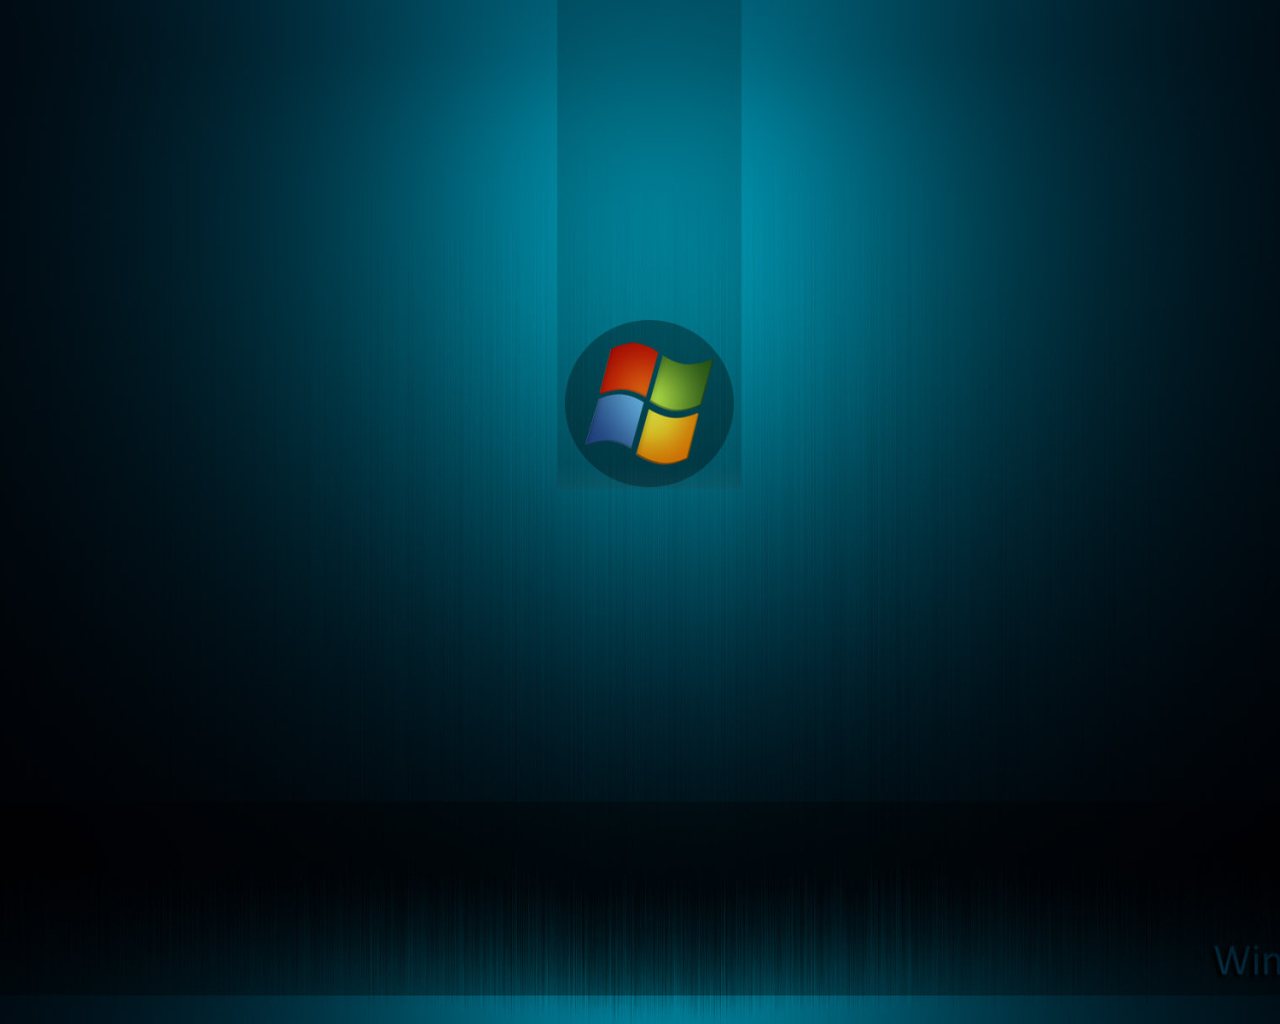 Microsoft Windows 7 wall